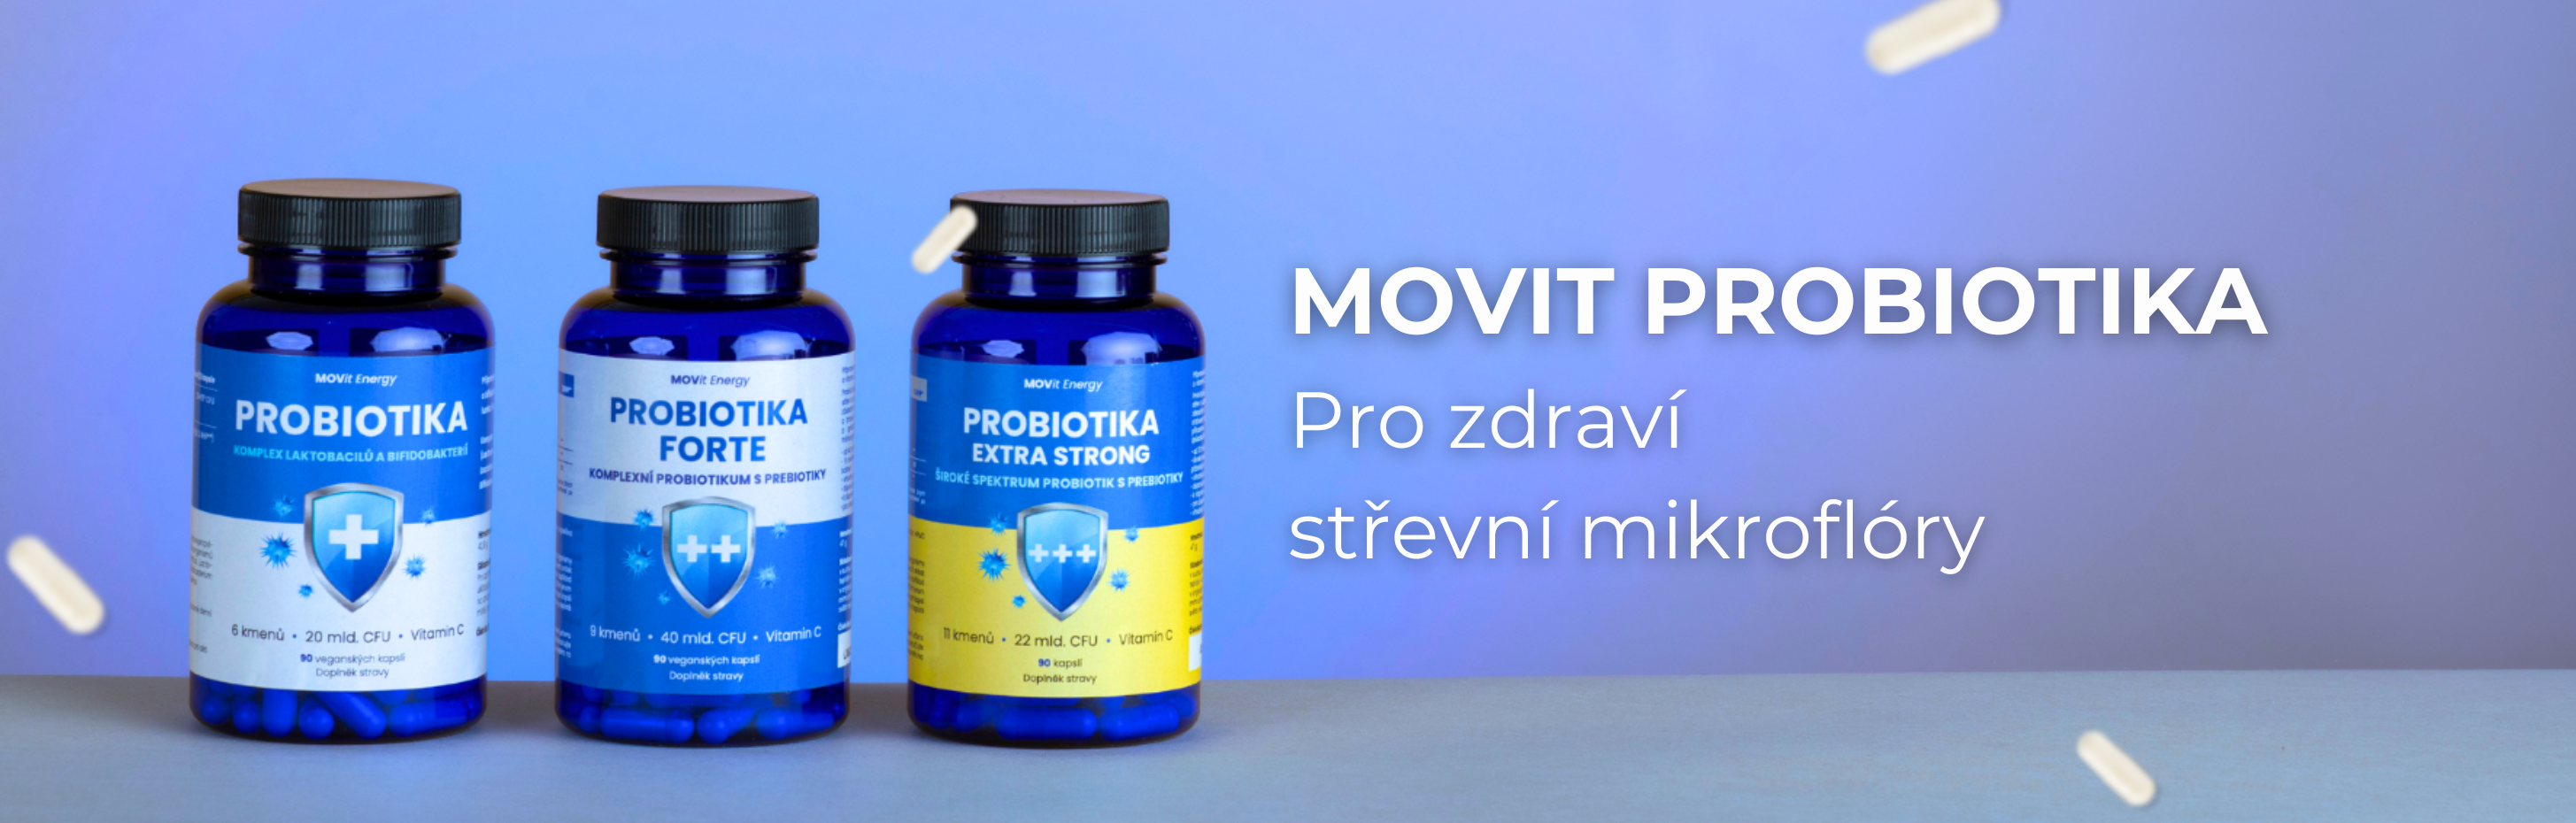 Probiotika MOVit Probiotika - komplex laktobacilů a bifidobakterií, 90 kapslí